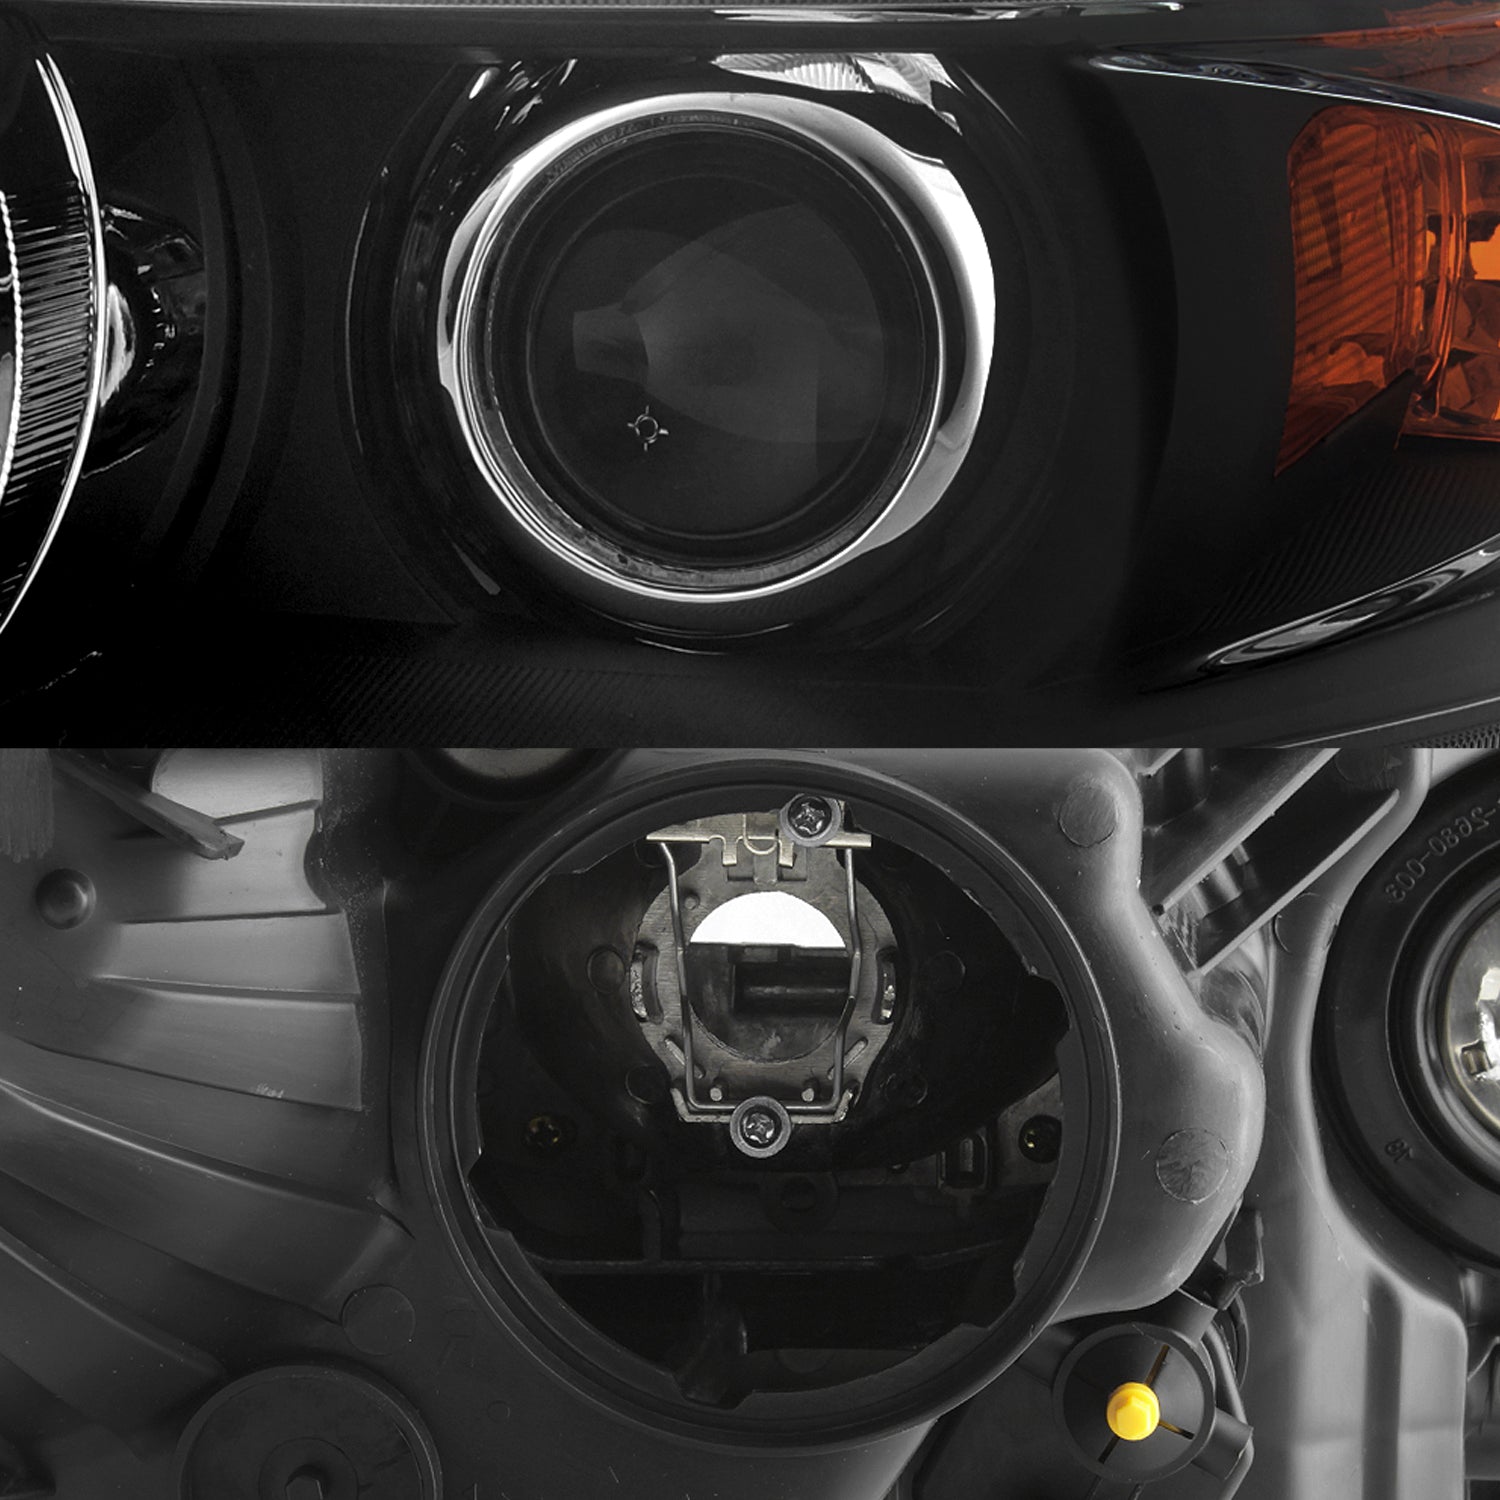 AKKON - [HID Type] Headlight For Acura TSX 2009-2014 HID Xenon Driver